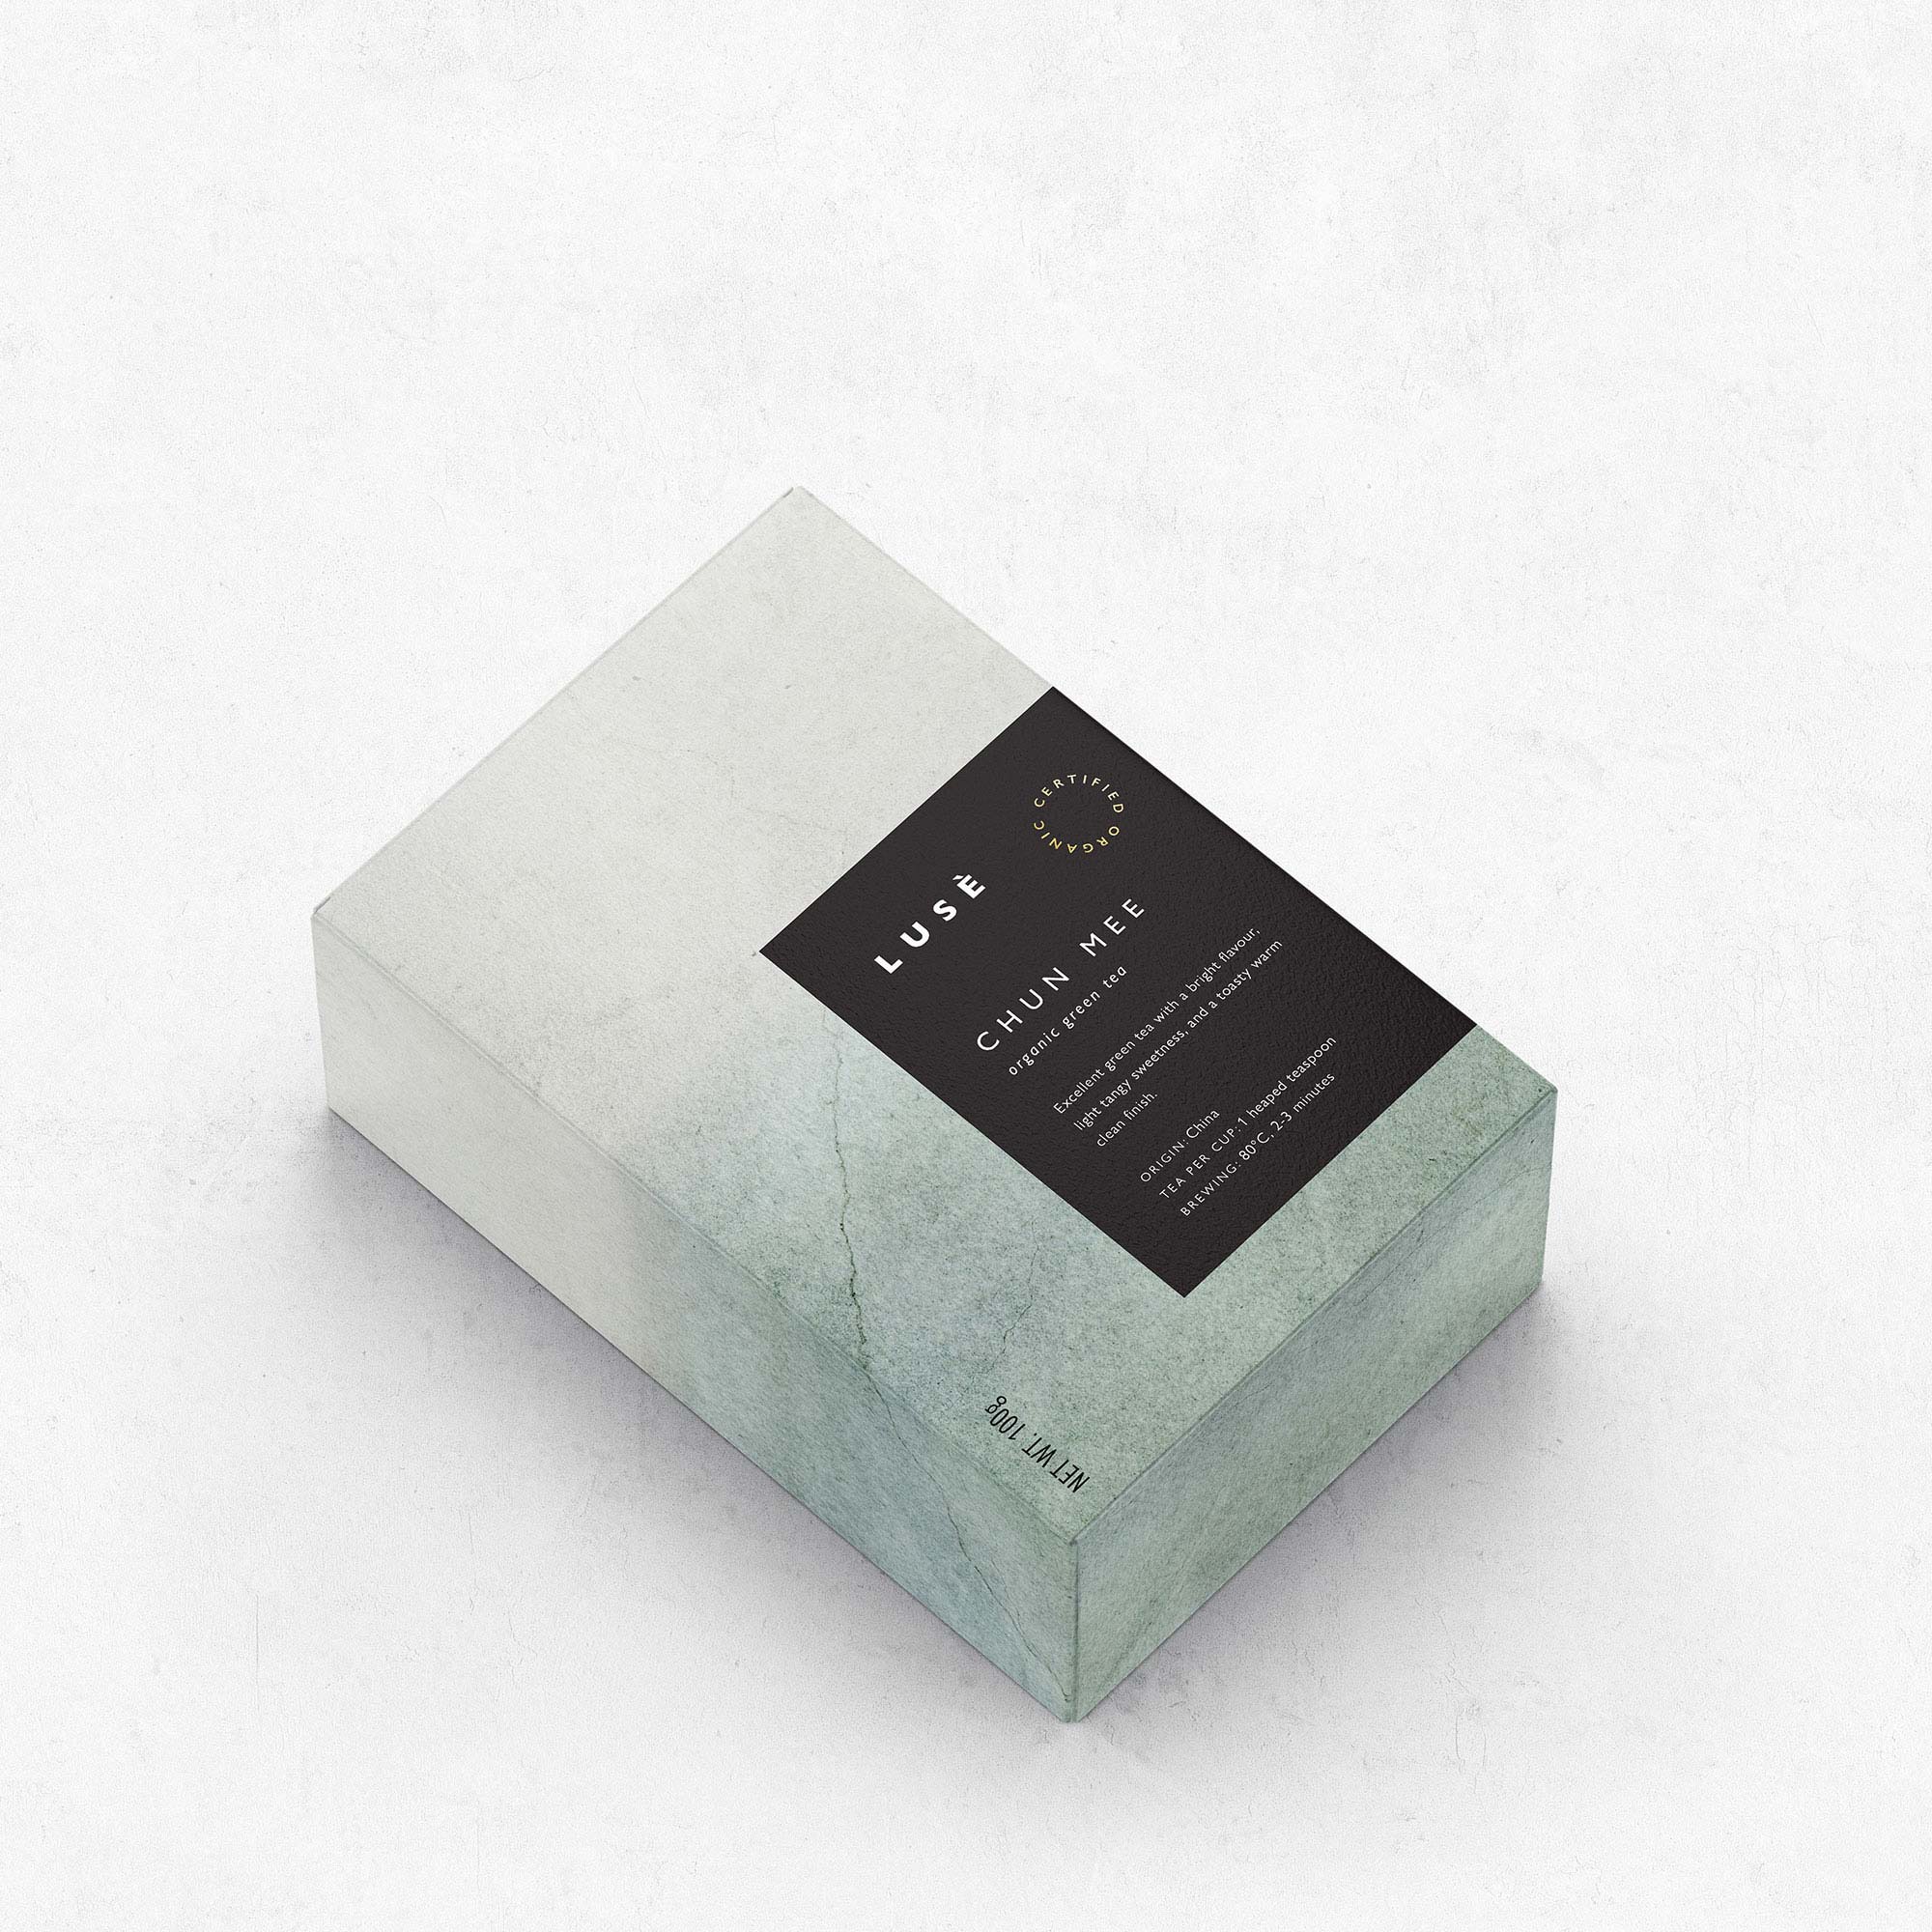 Karolina Król Studio modern elegant abstract art inspired packaging design for organic tea boxes